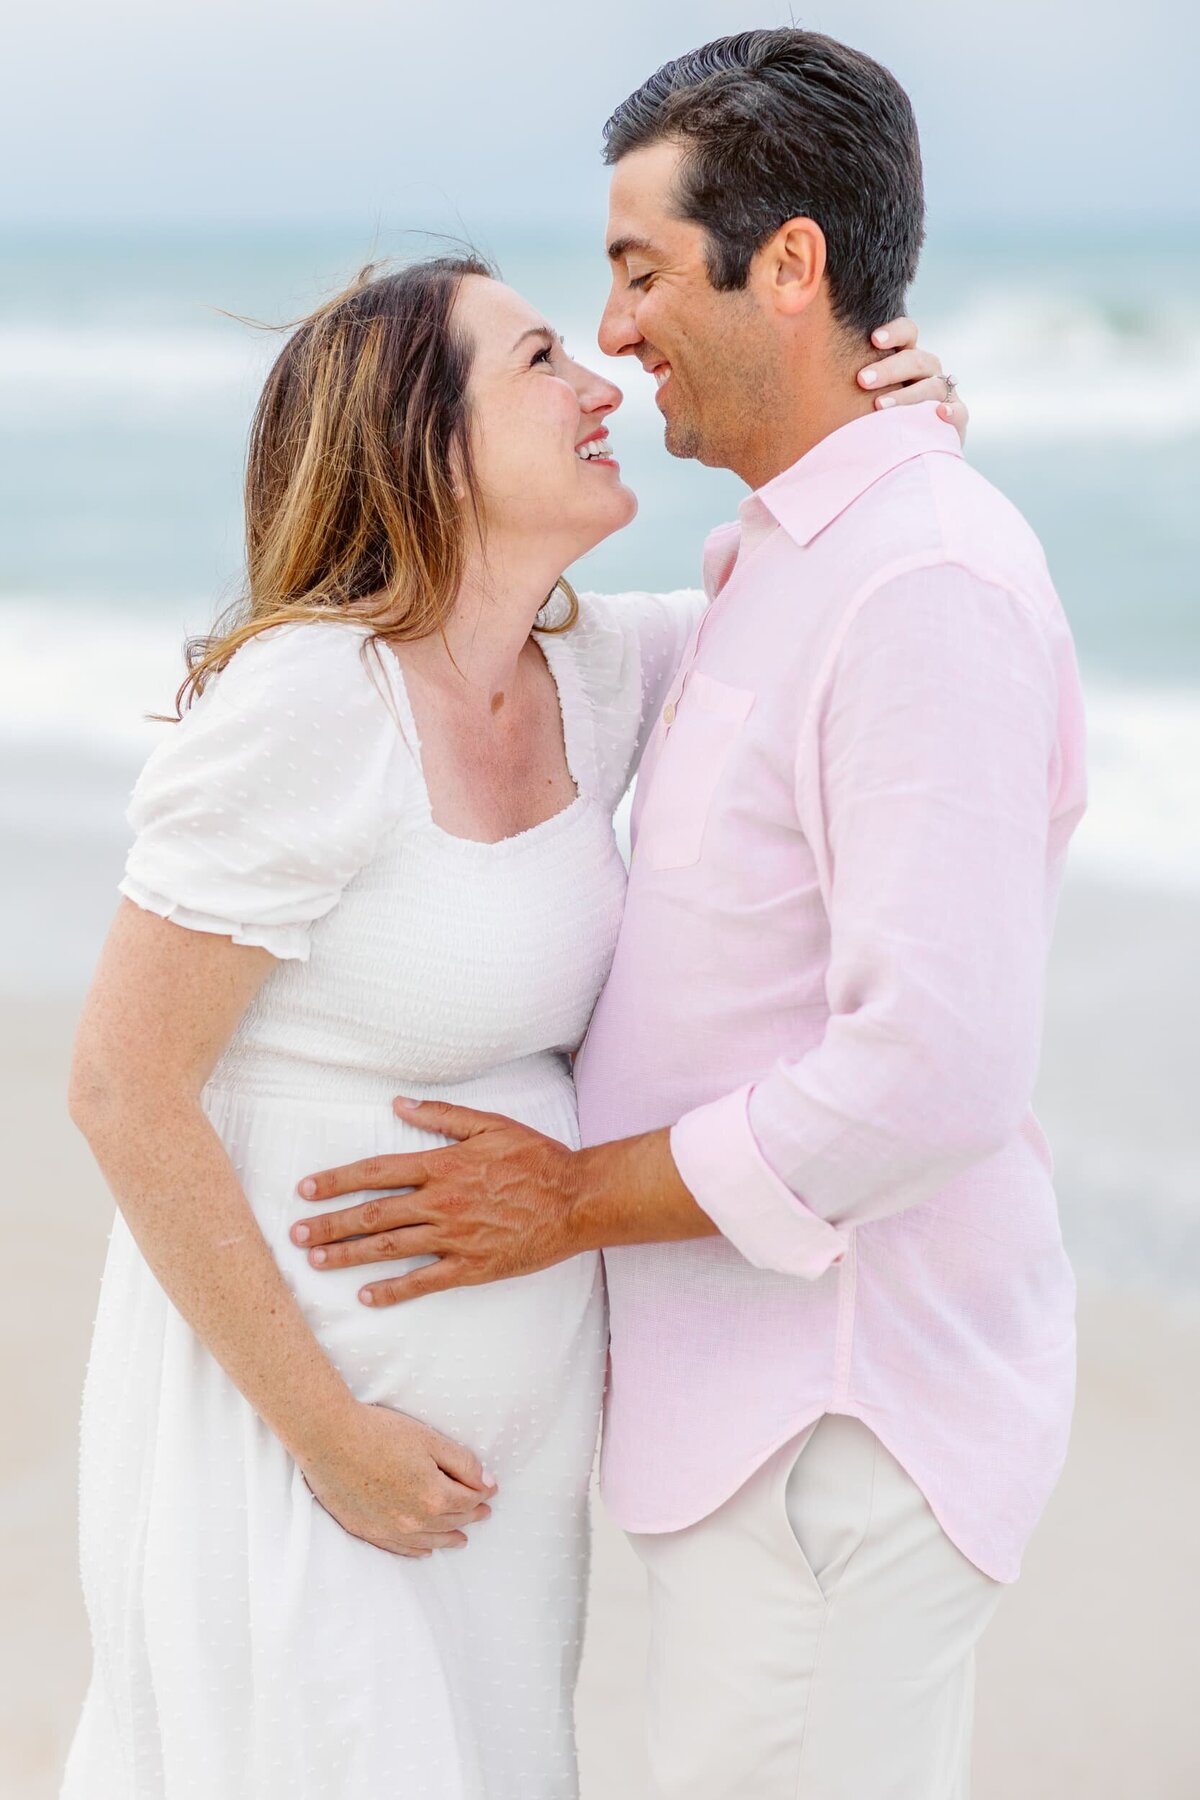 New Smyrna Beach Maternity Photographer | Maggie Collins-13